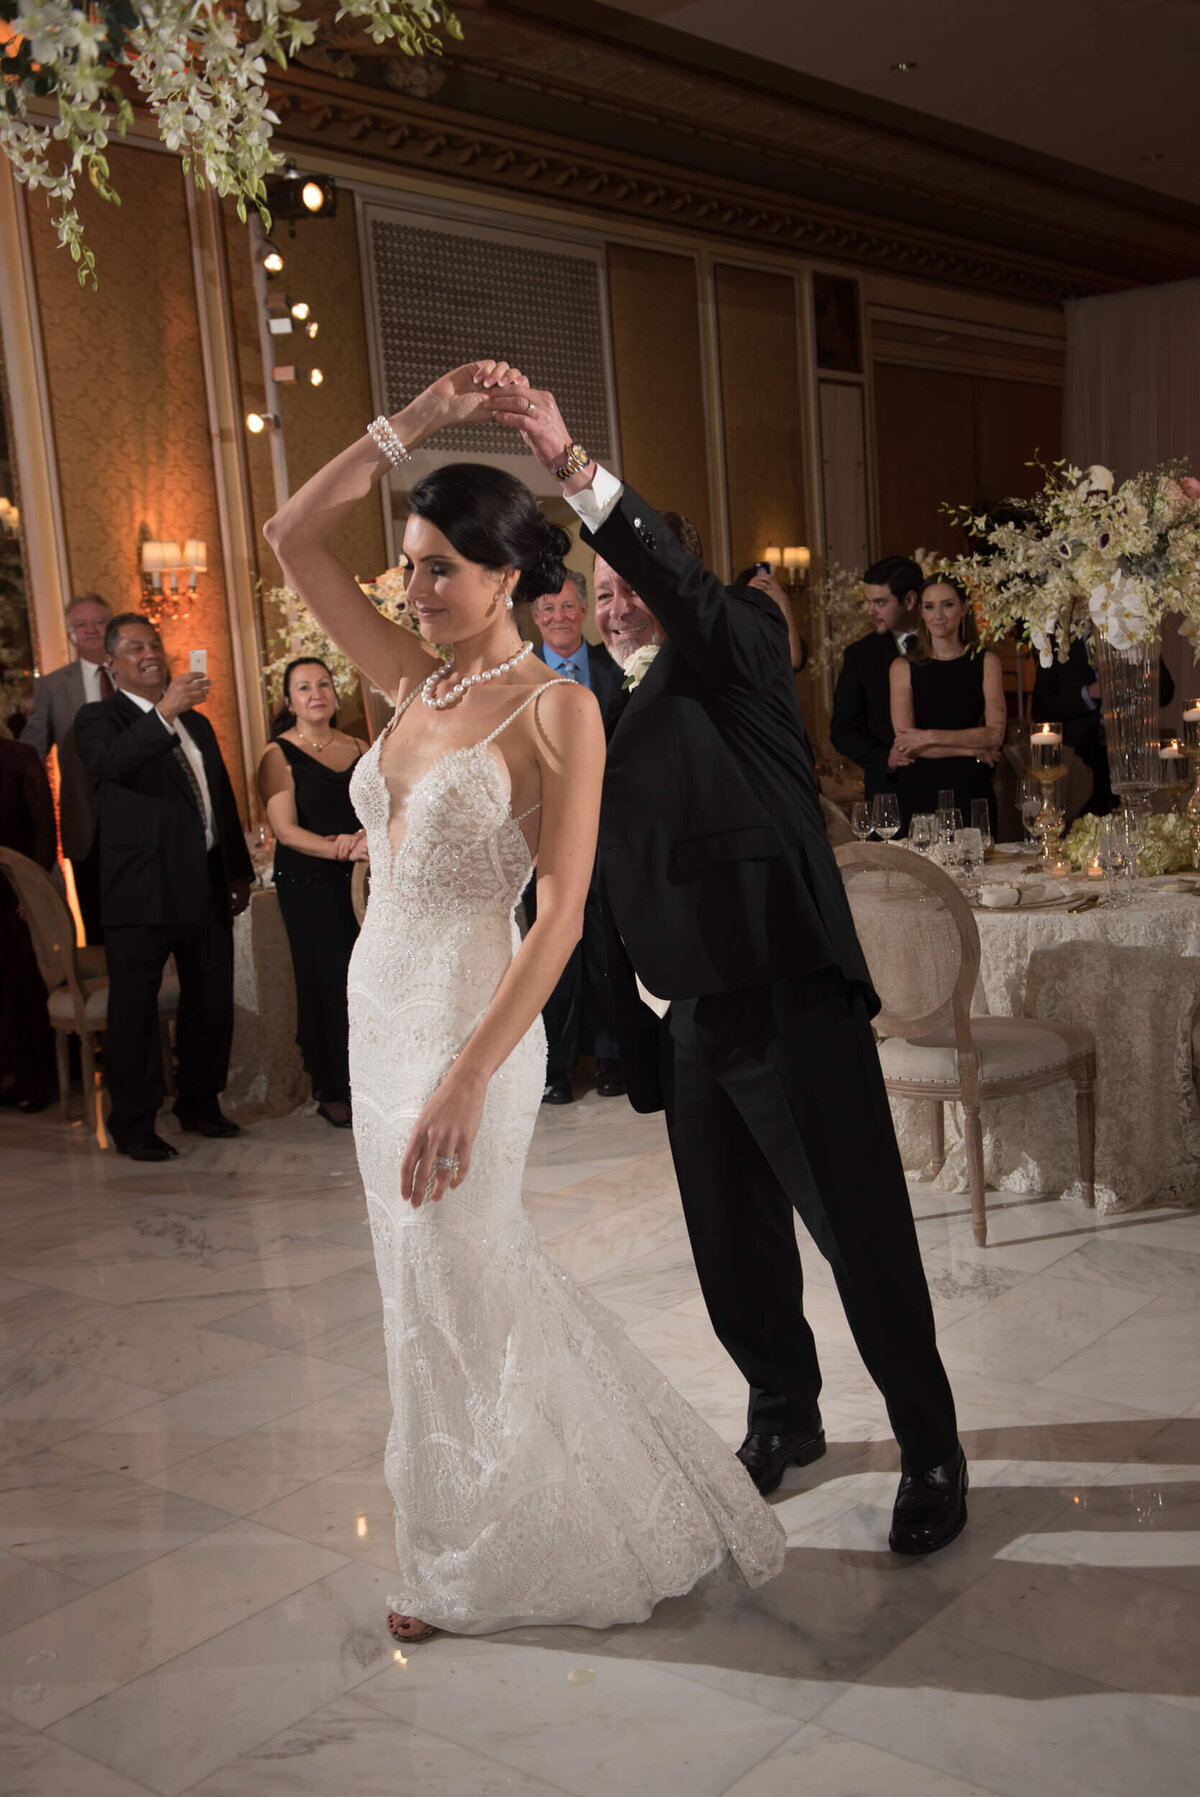 Groom twirls bride around during their first dance at the reception